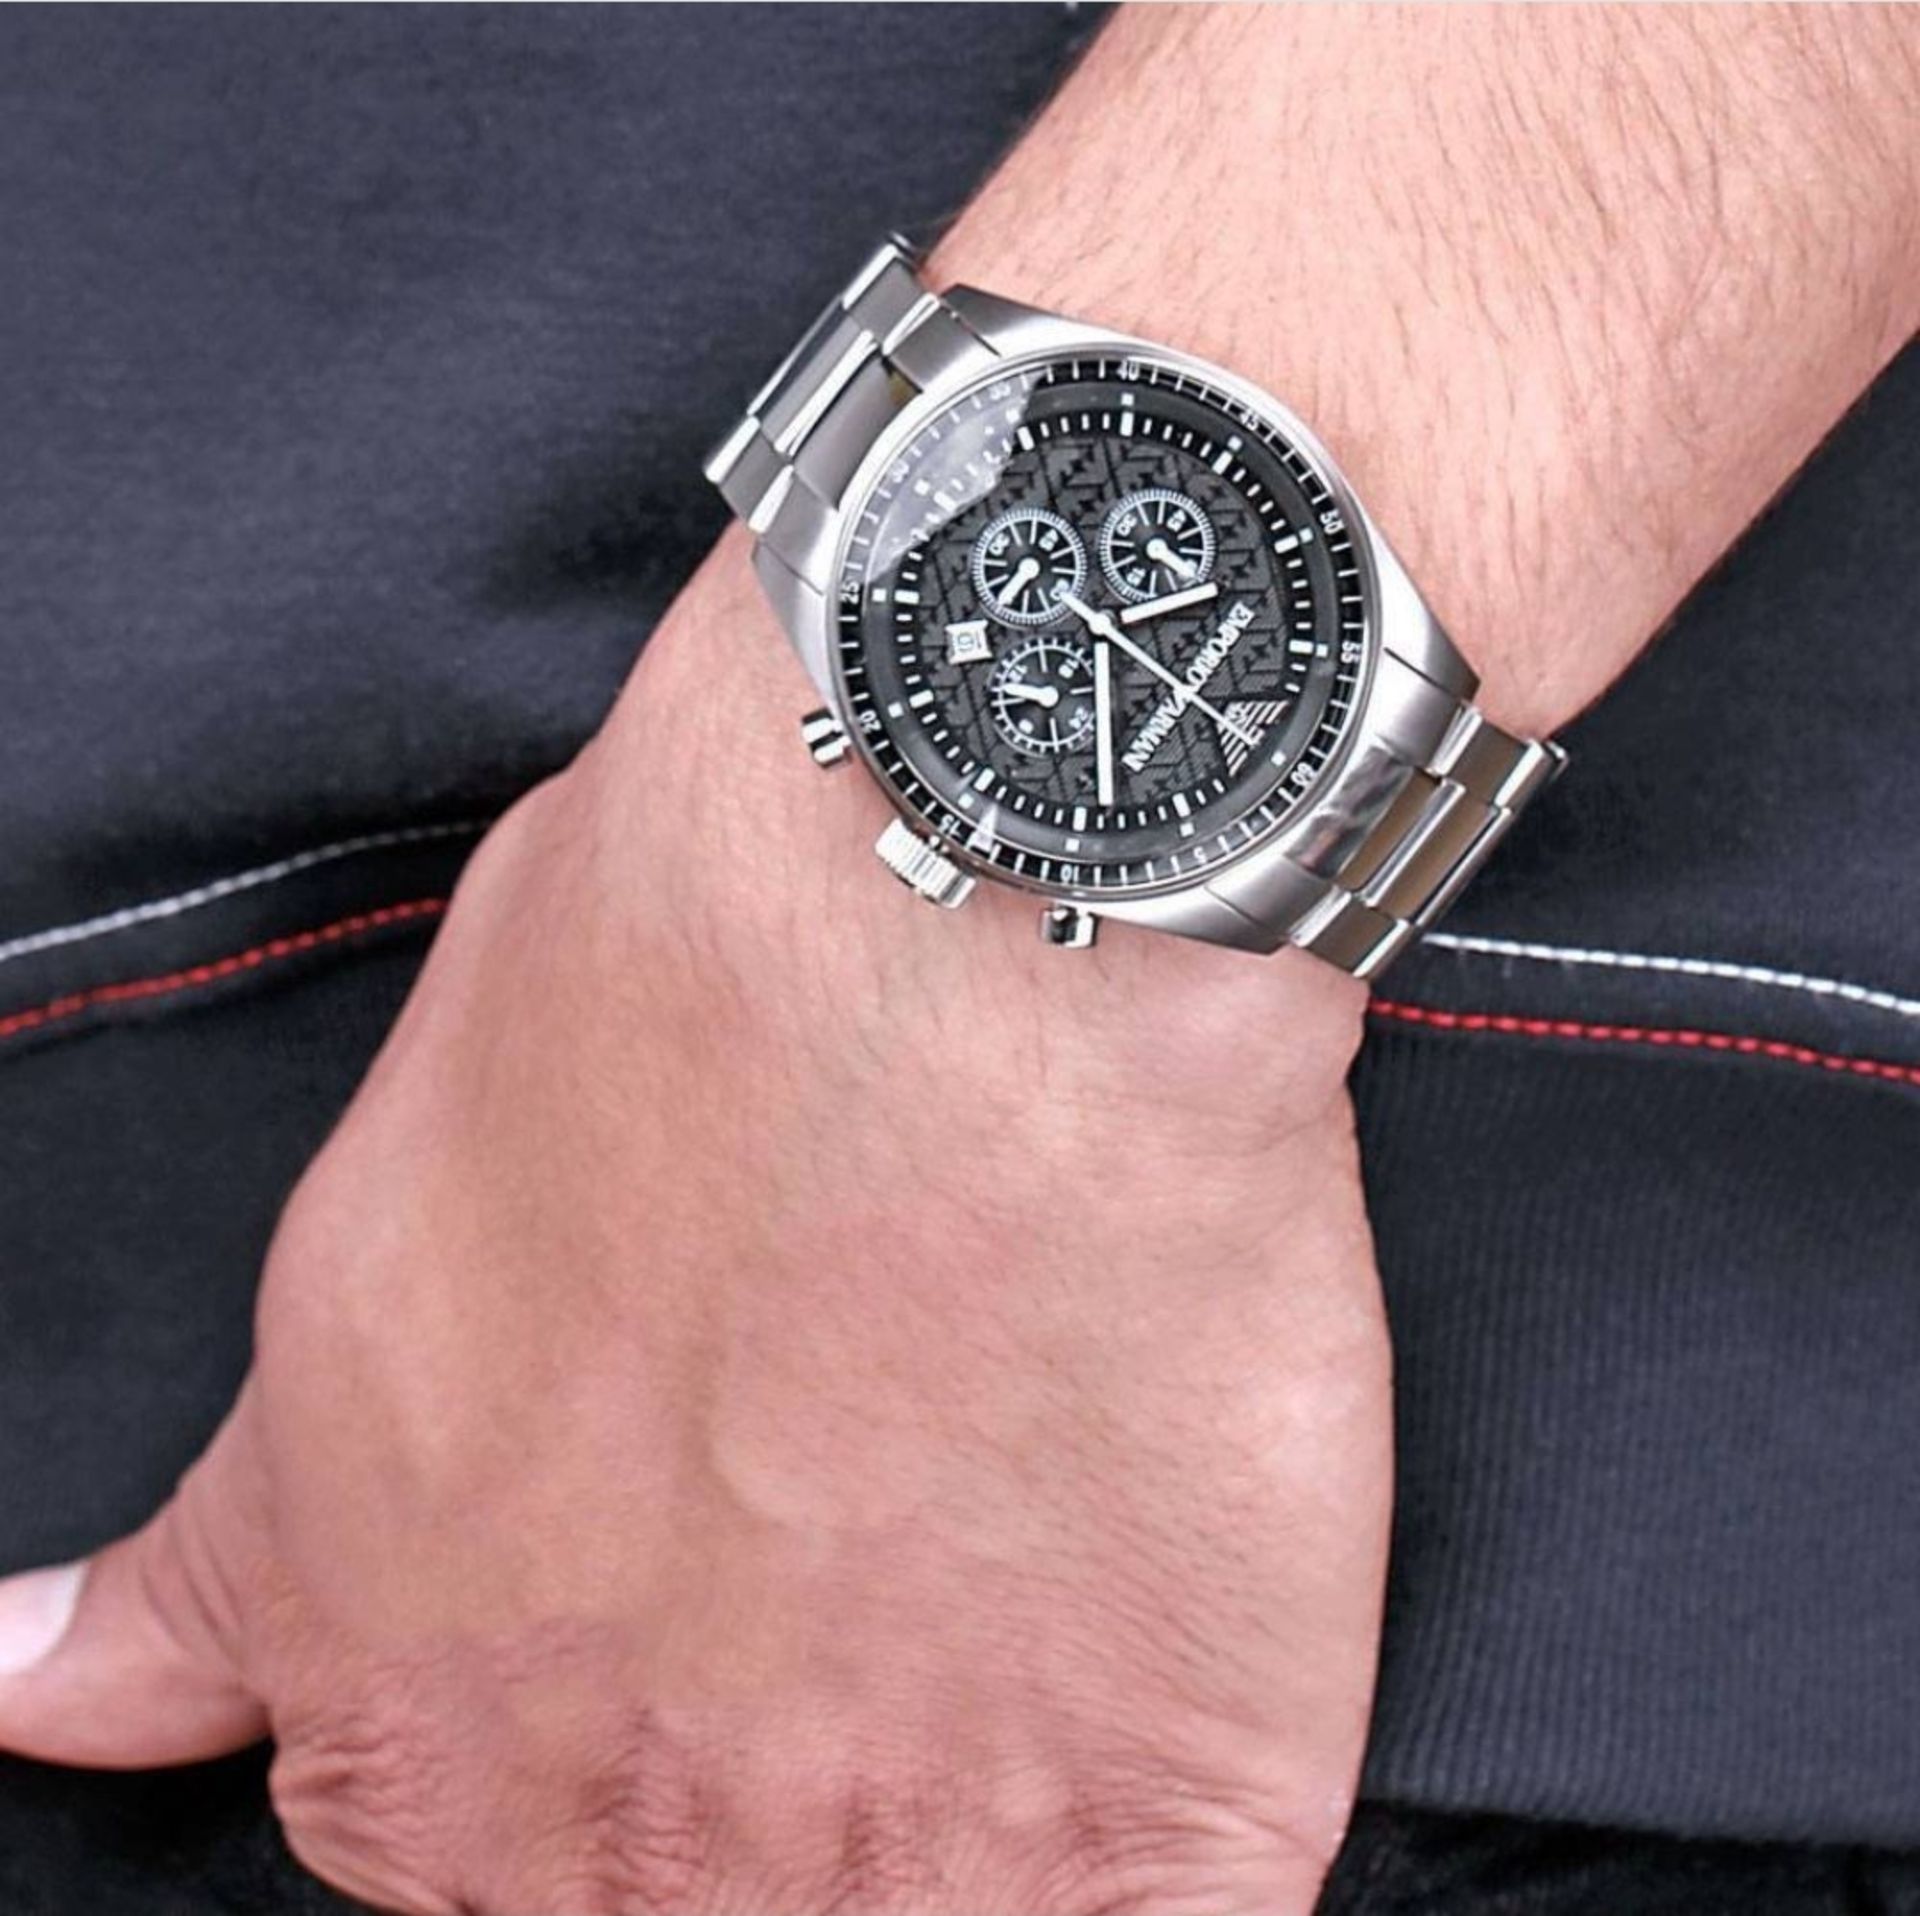 Emporio Armani AR0585 Men's Classic Silver Bracelet Chronograph Watch - Image 3 of 8